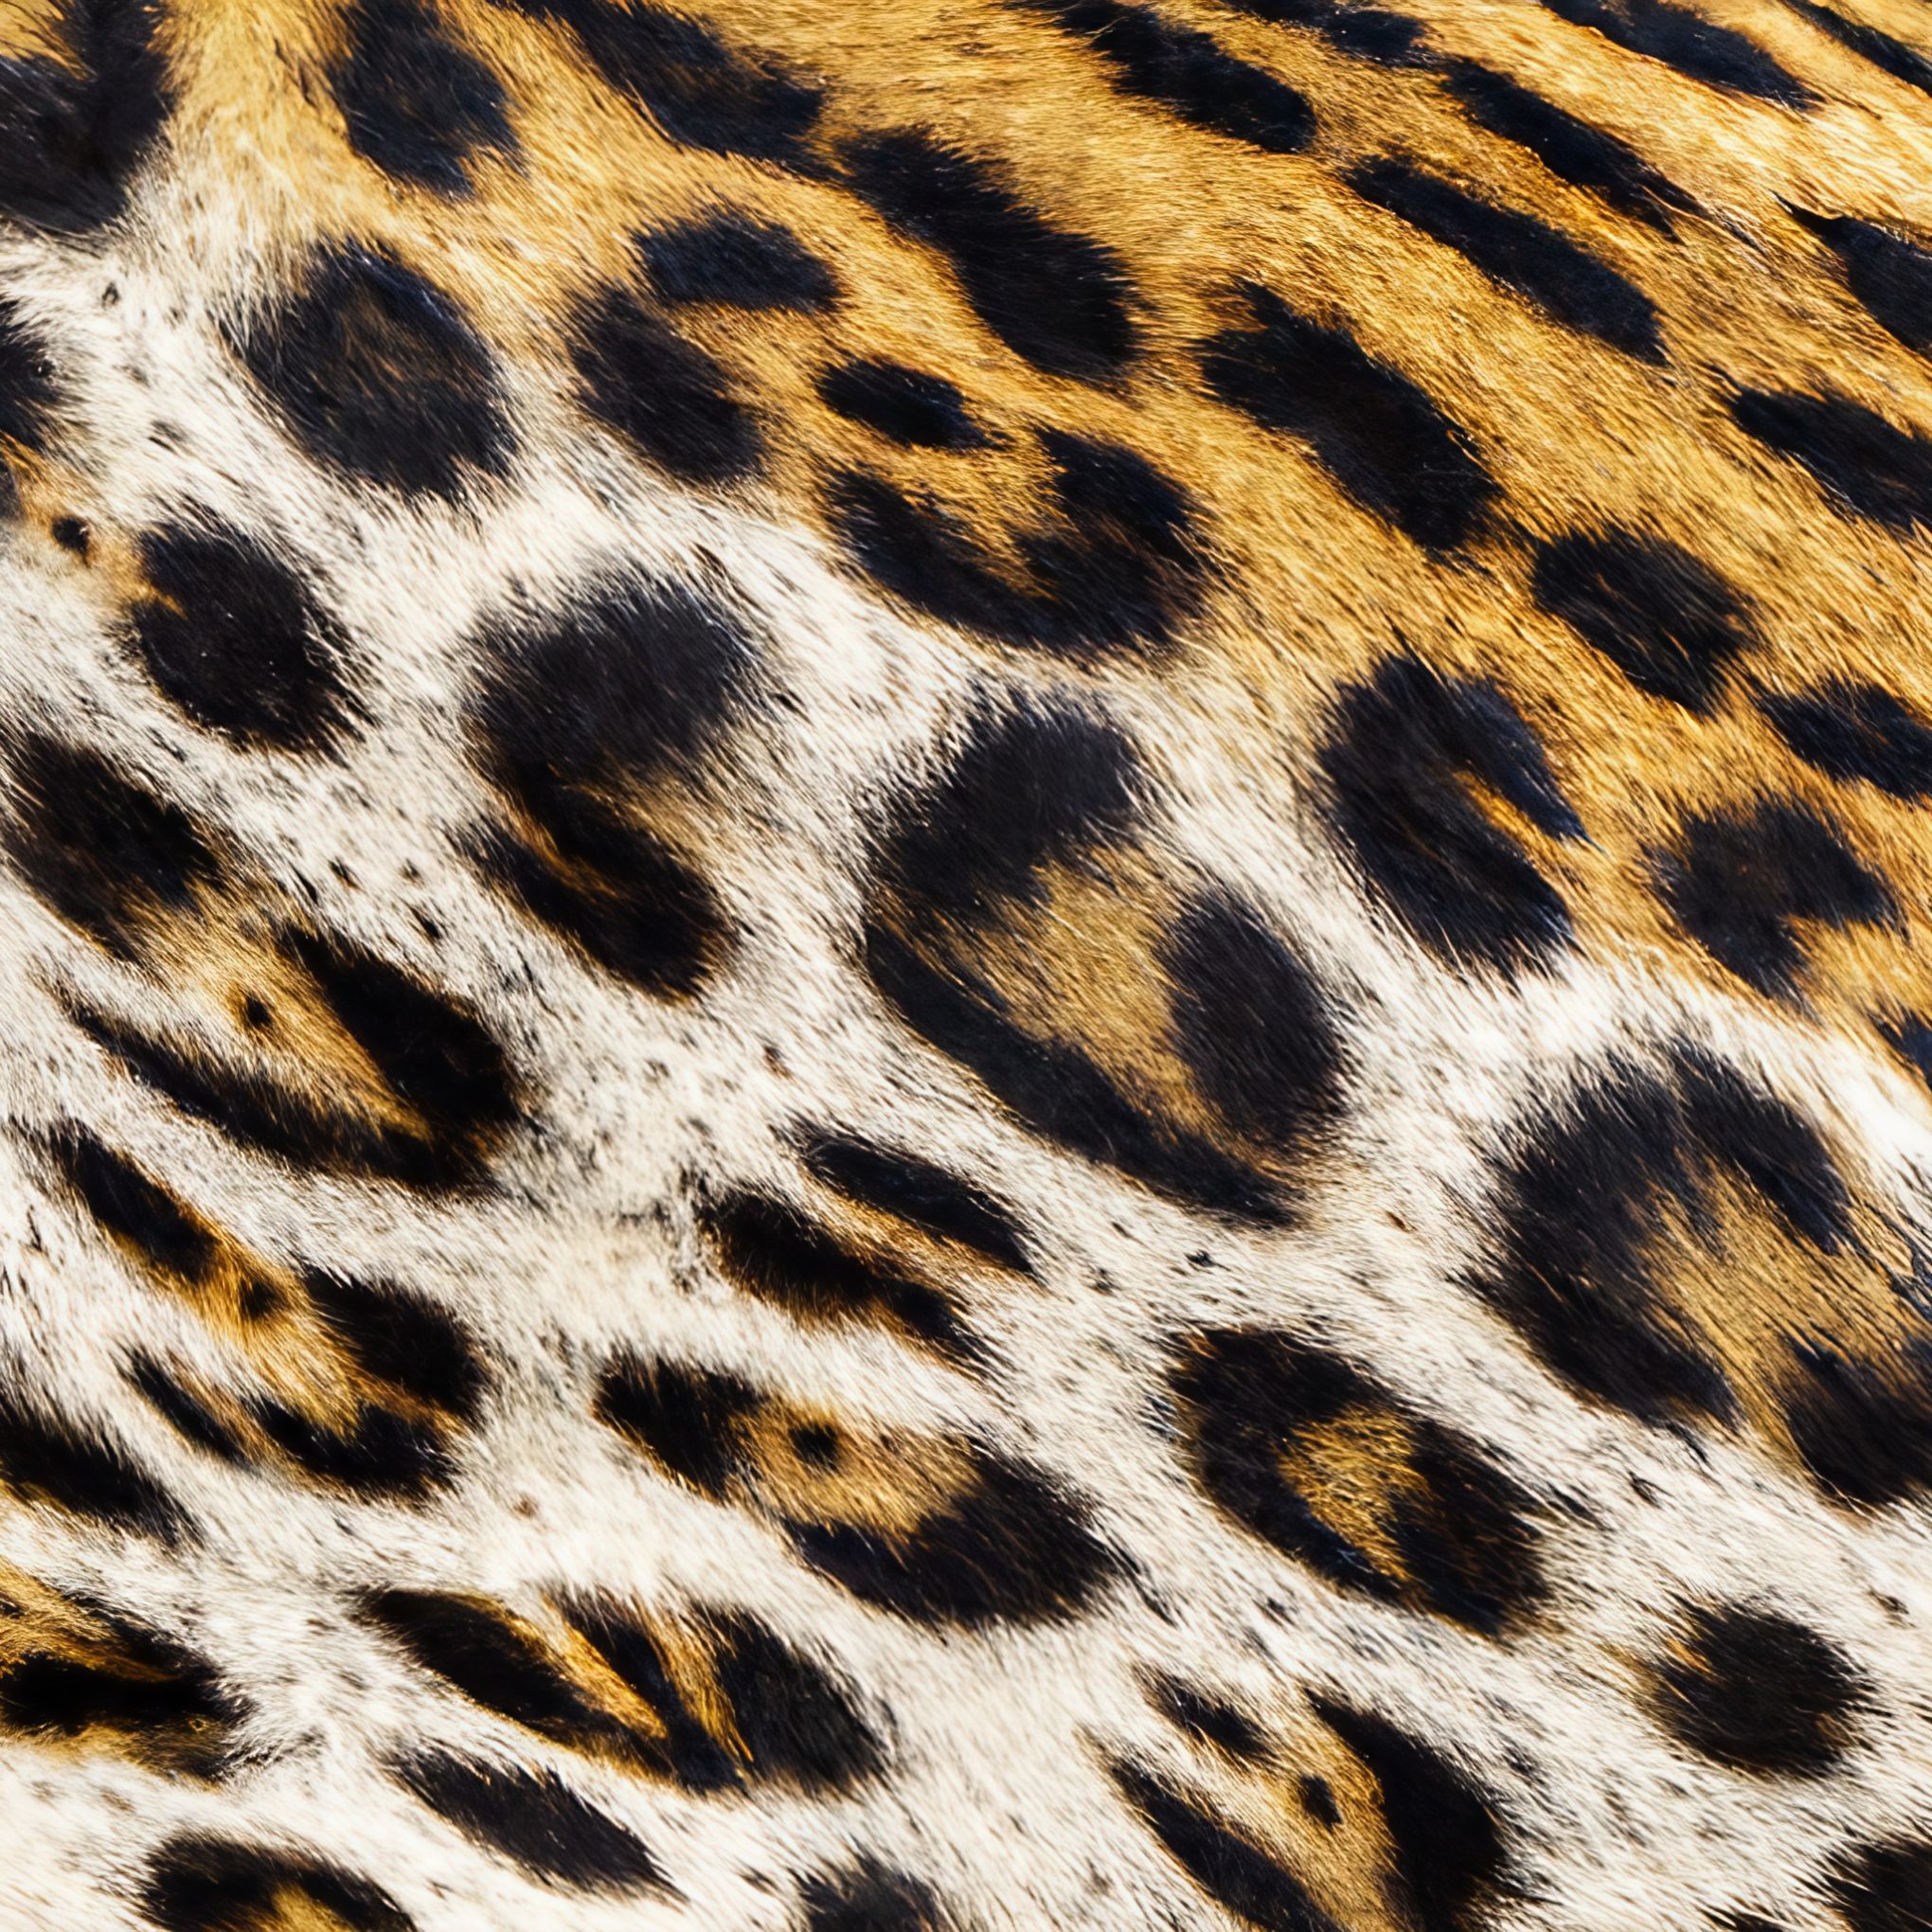 Jaguar Animal Print Close up Free Stock Image Download